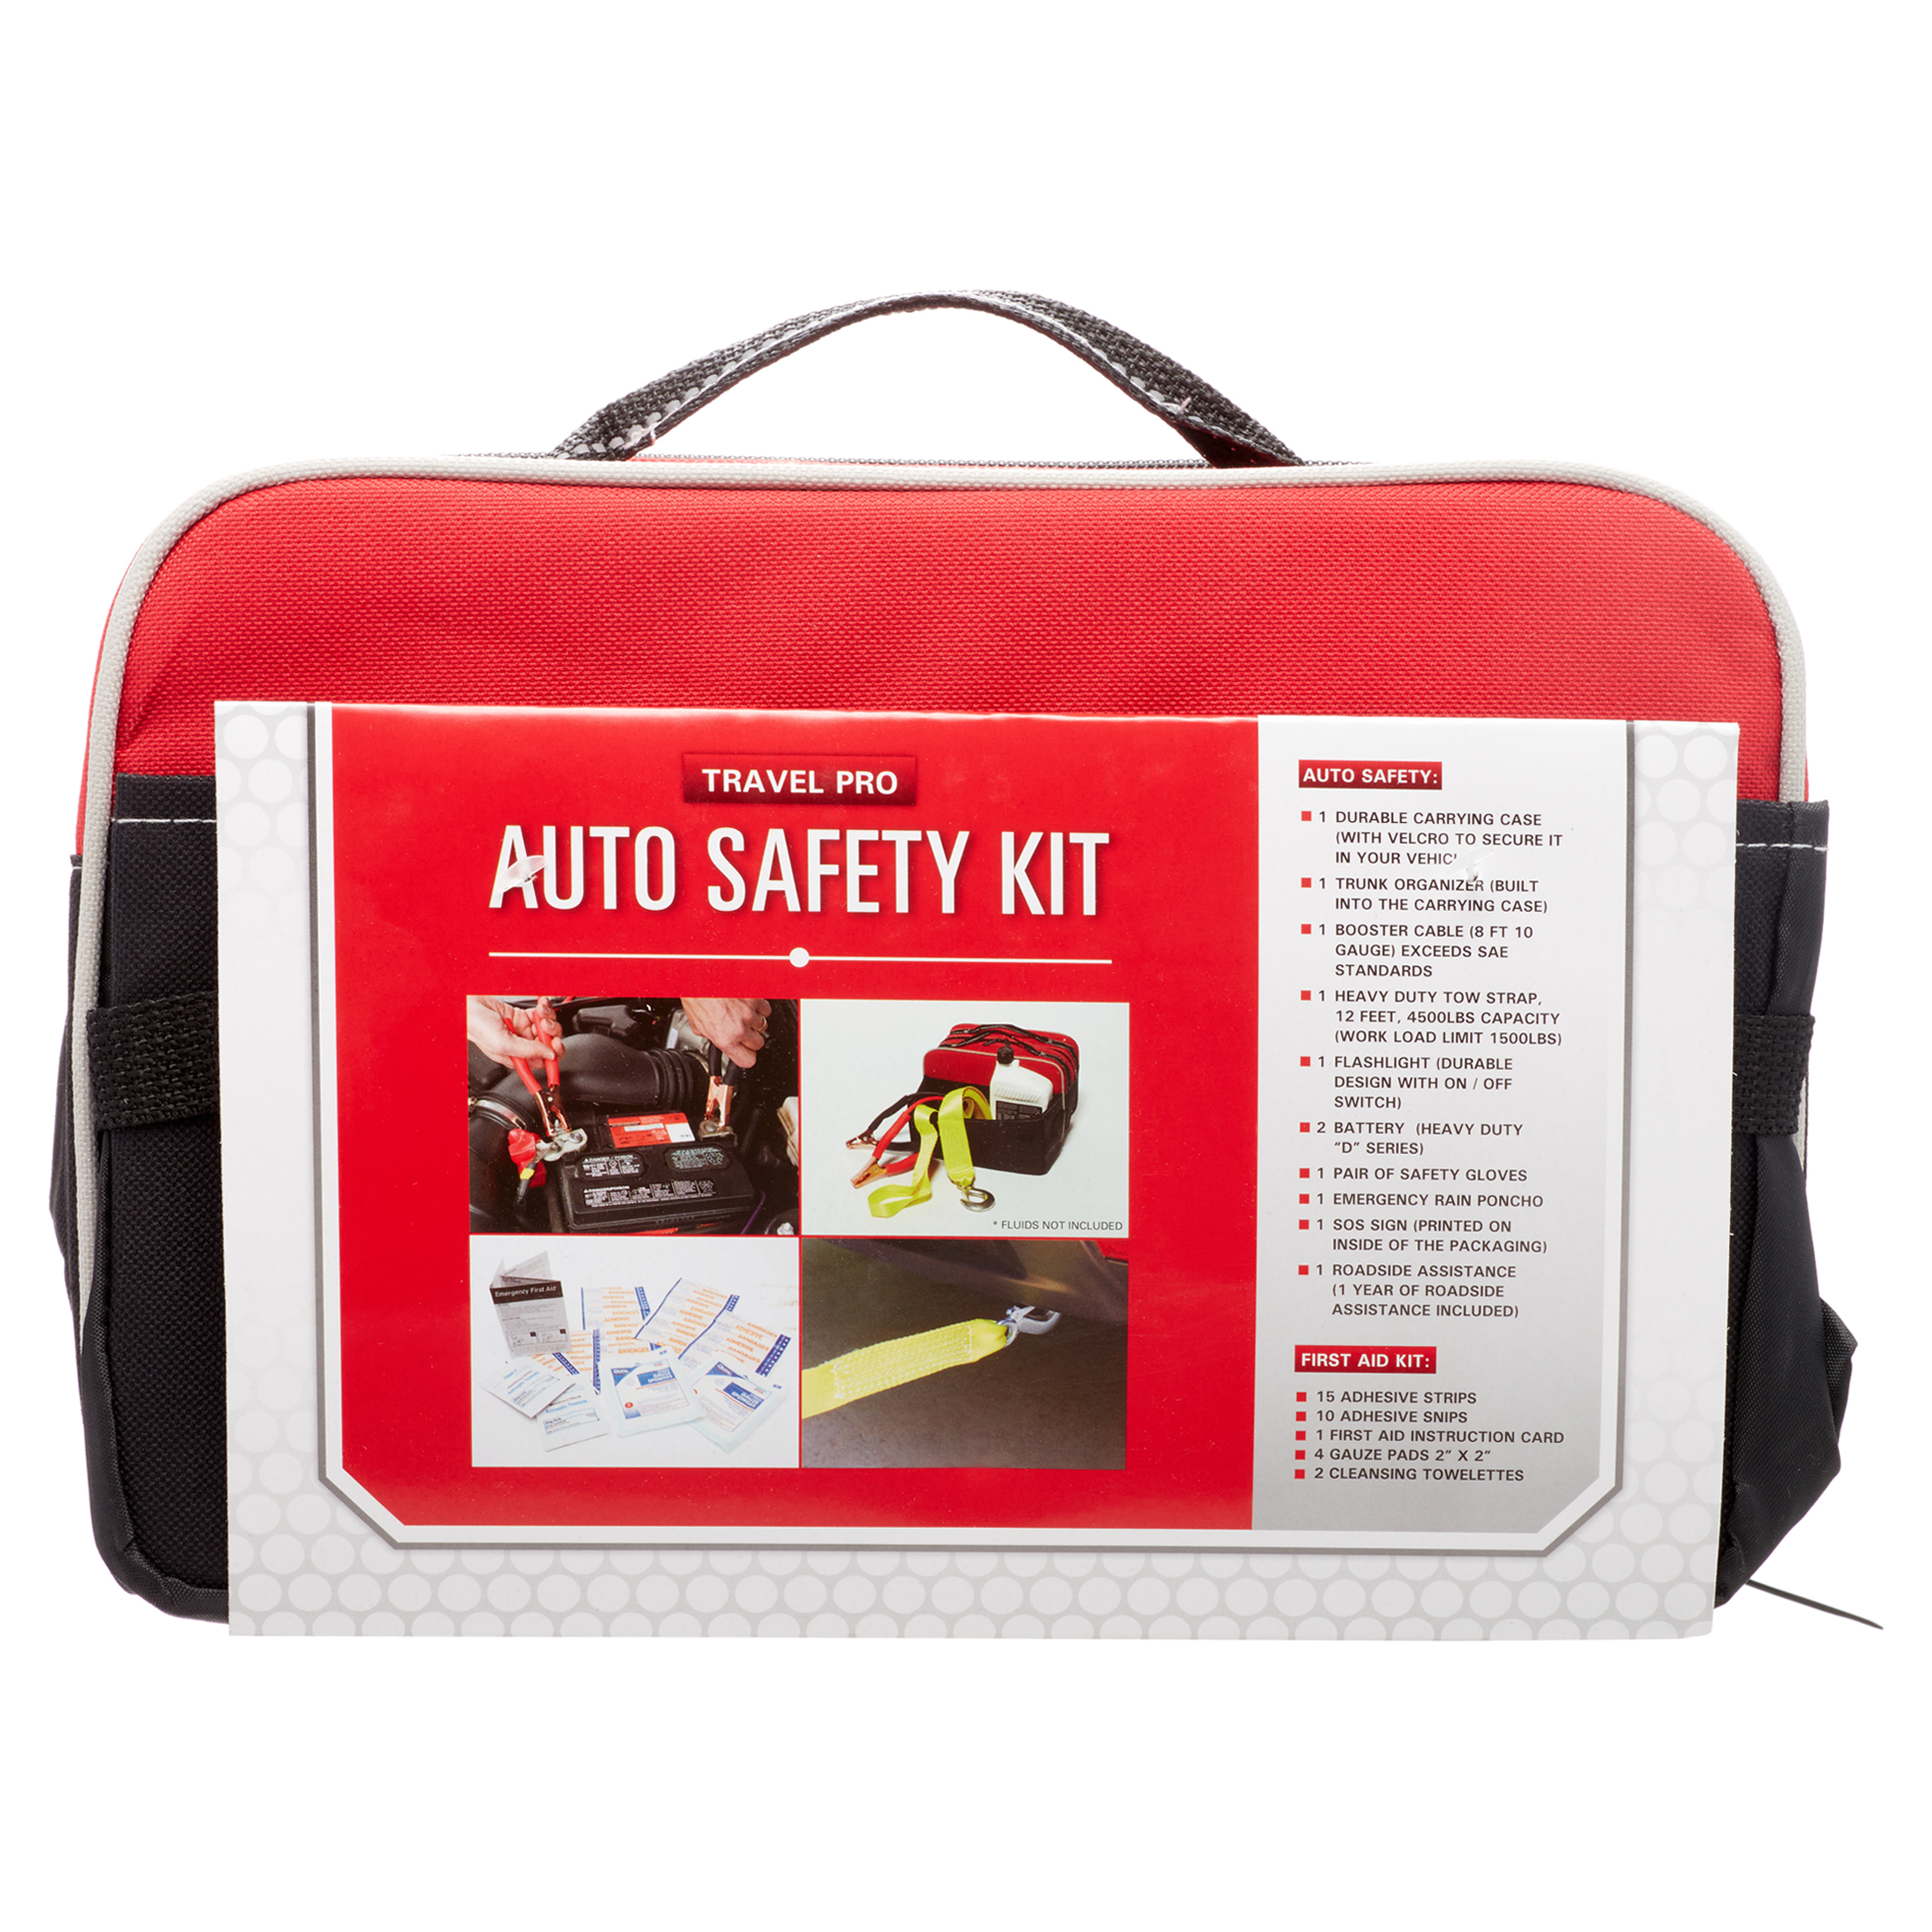 Justincase Travel Pro Auto Safety Kit - image 3 of 7